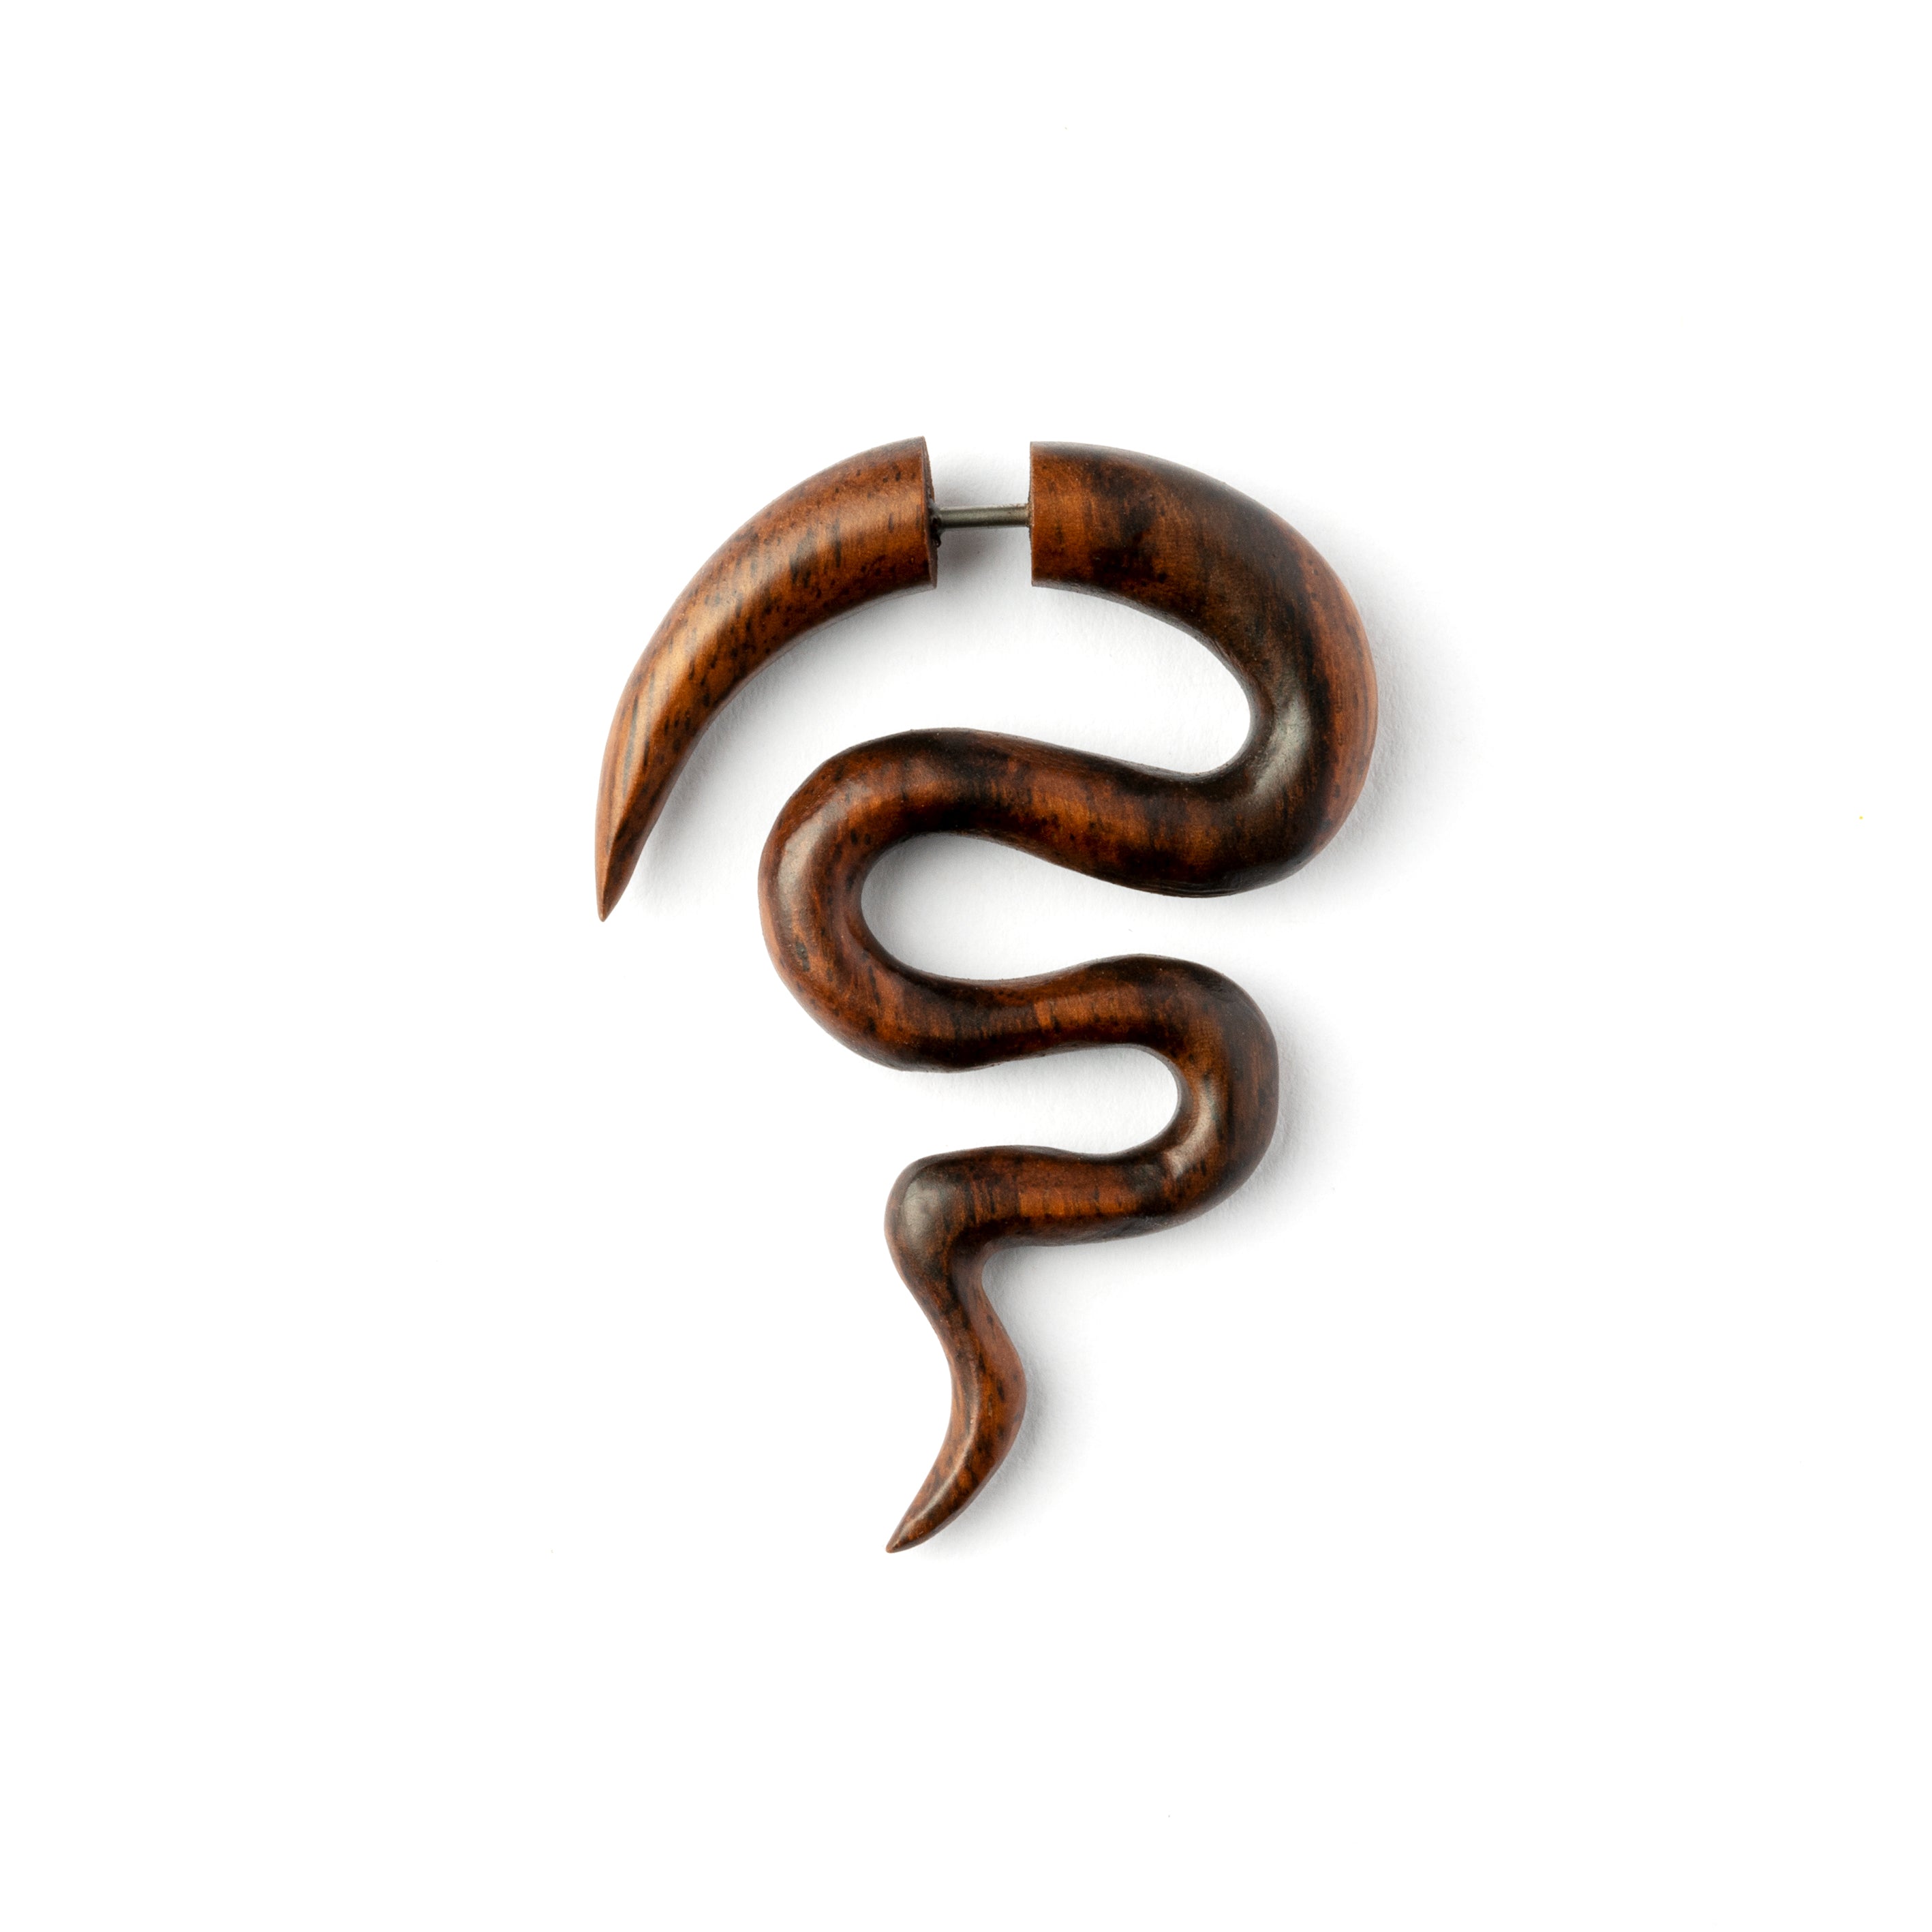 single wooden fake gauge earring in a spiky serpentine shape frontal view